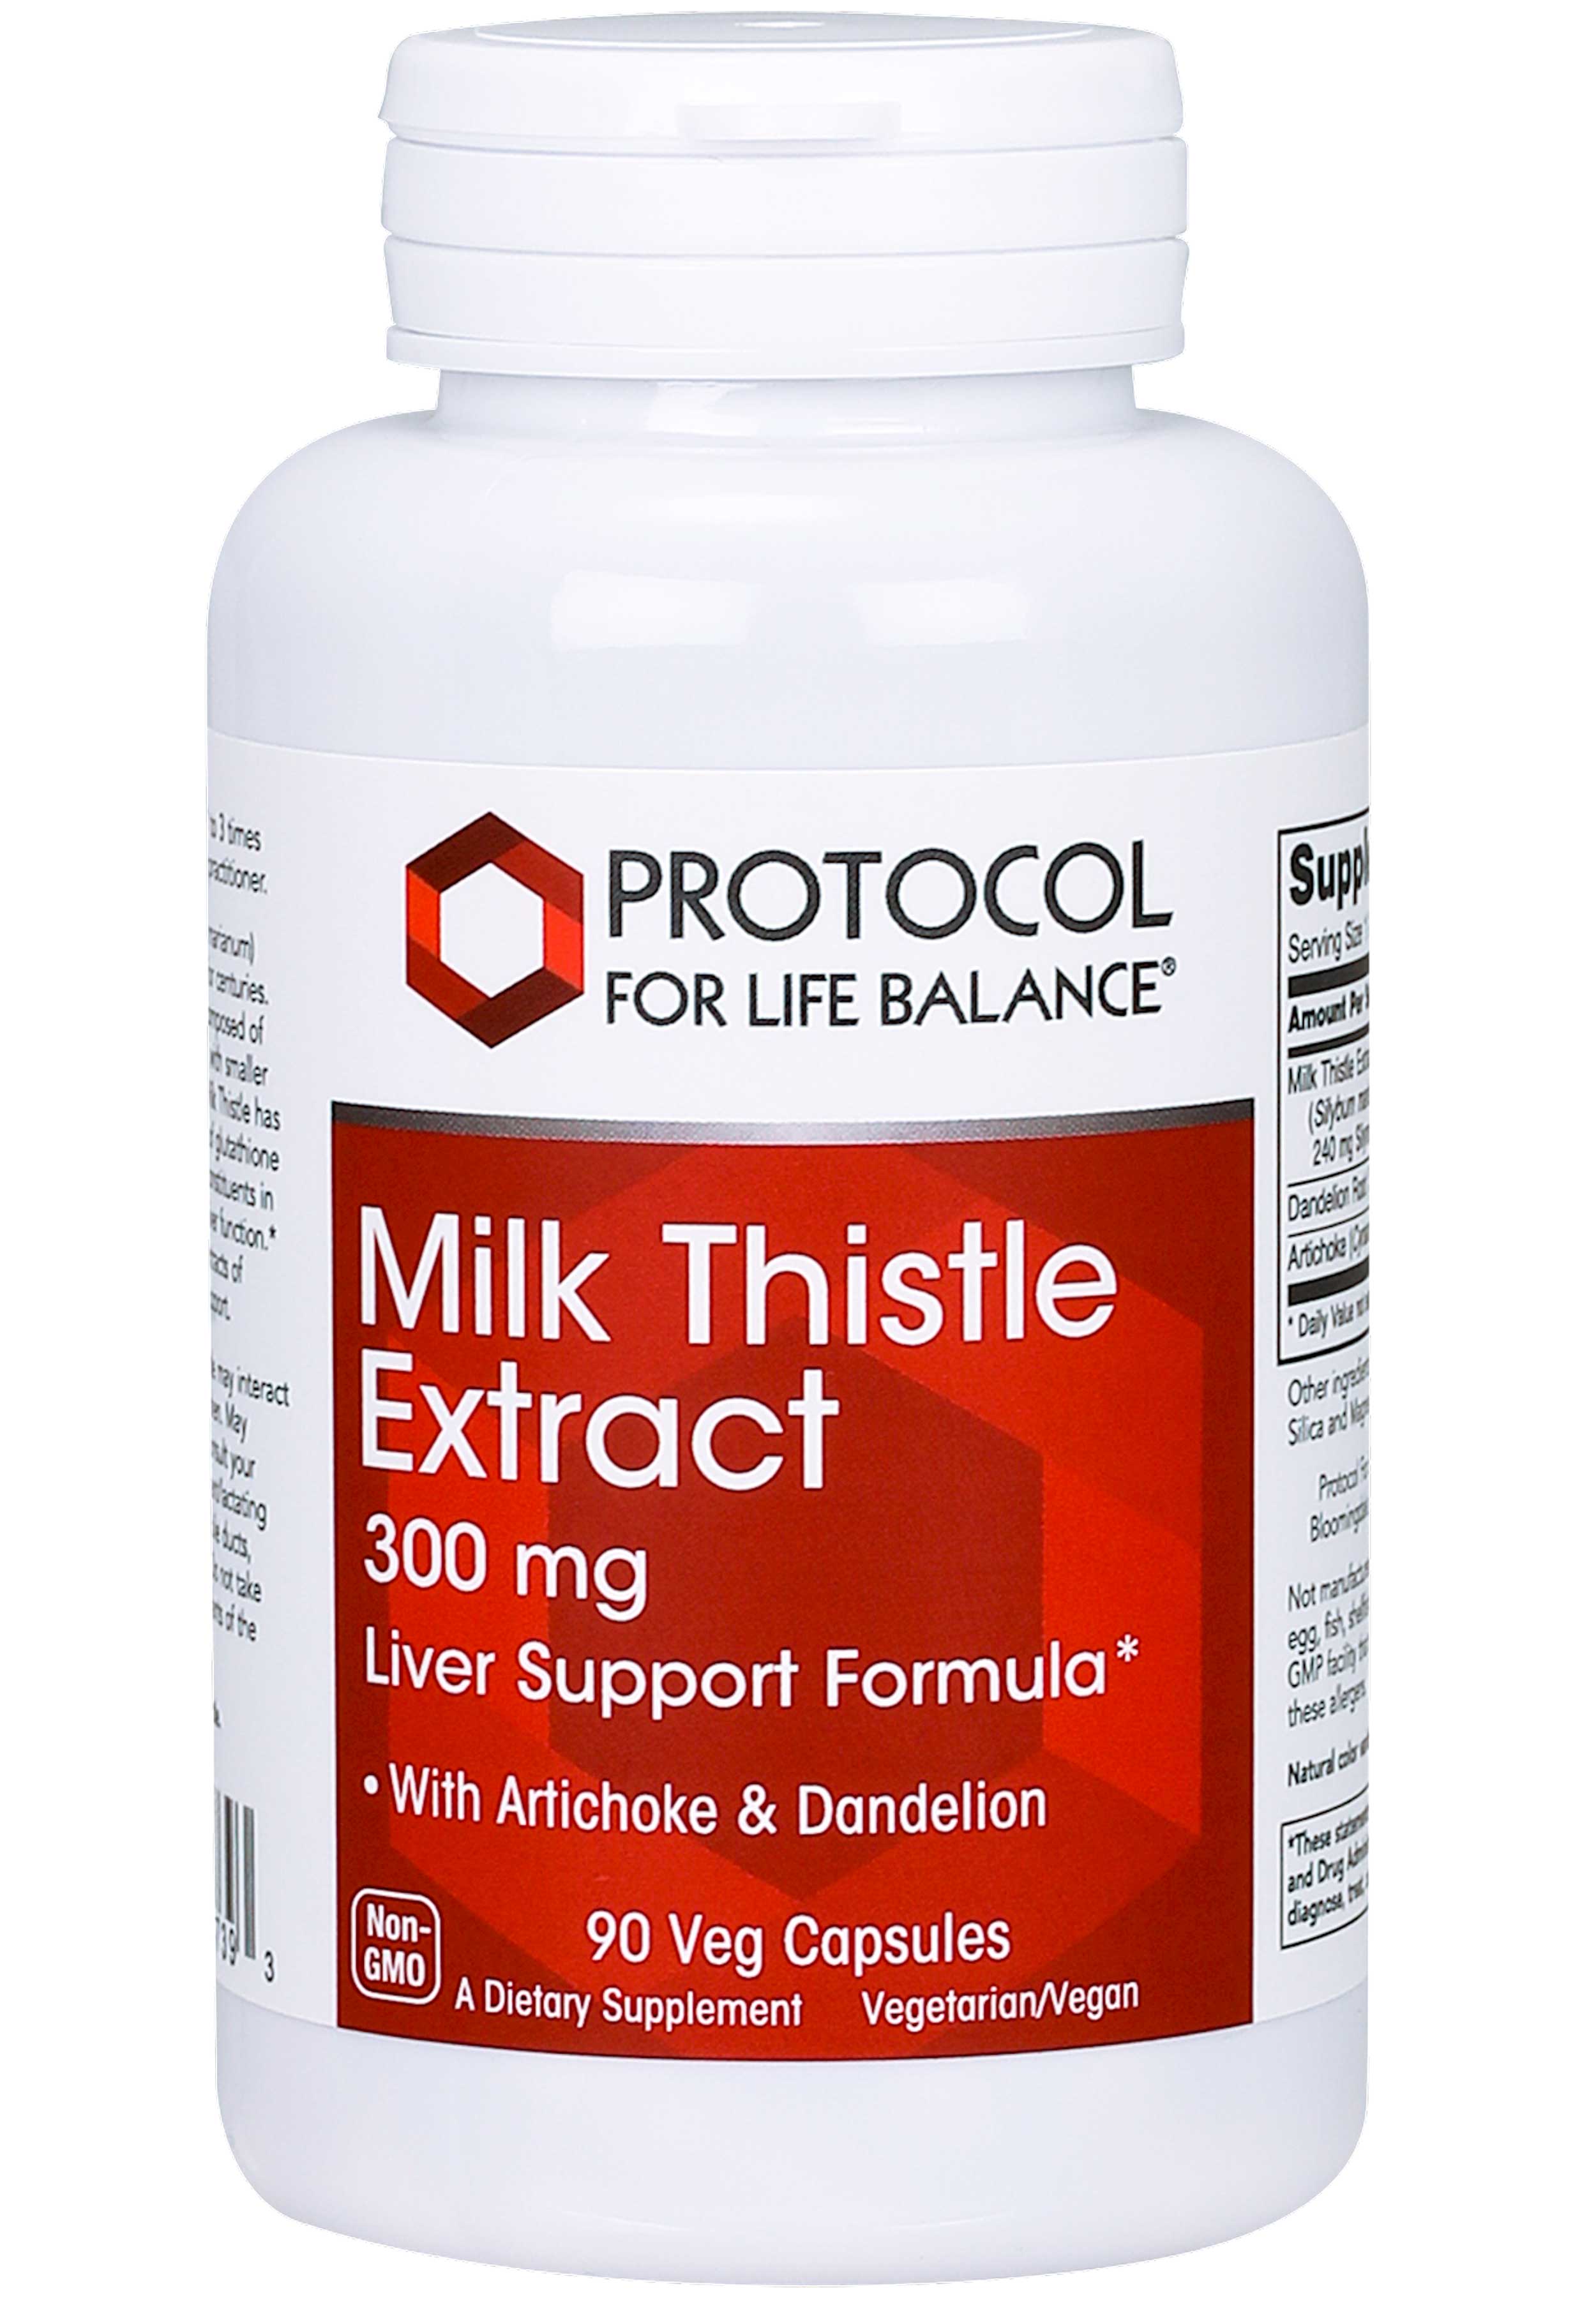 Protocol for Life Balance Milk Thistle Extract